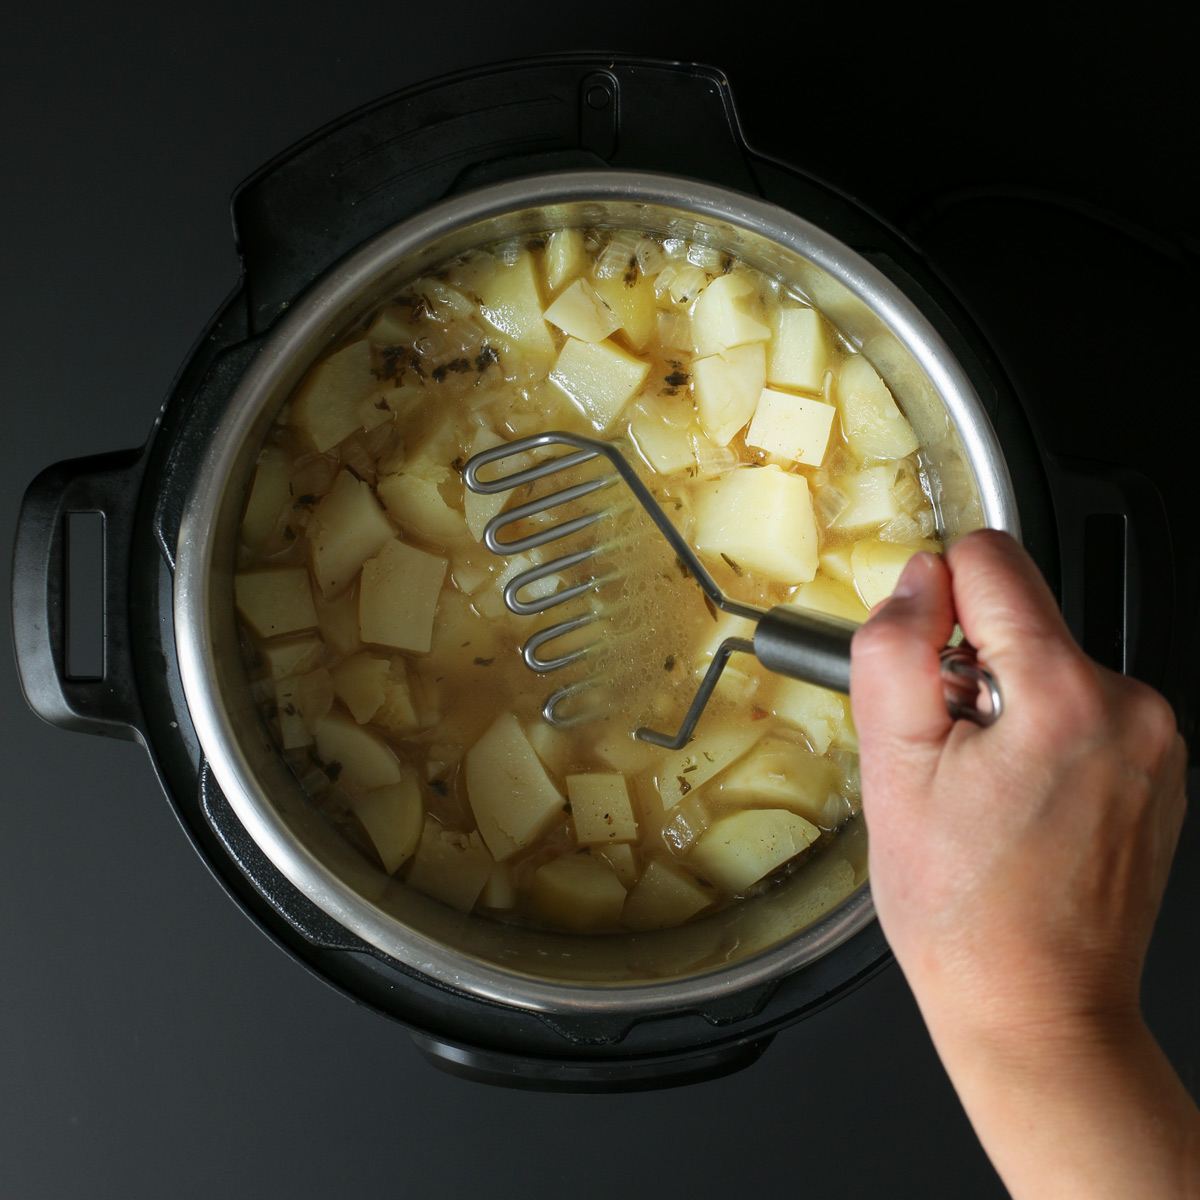 mashing potatoes with masher in pot.